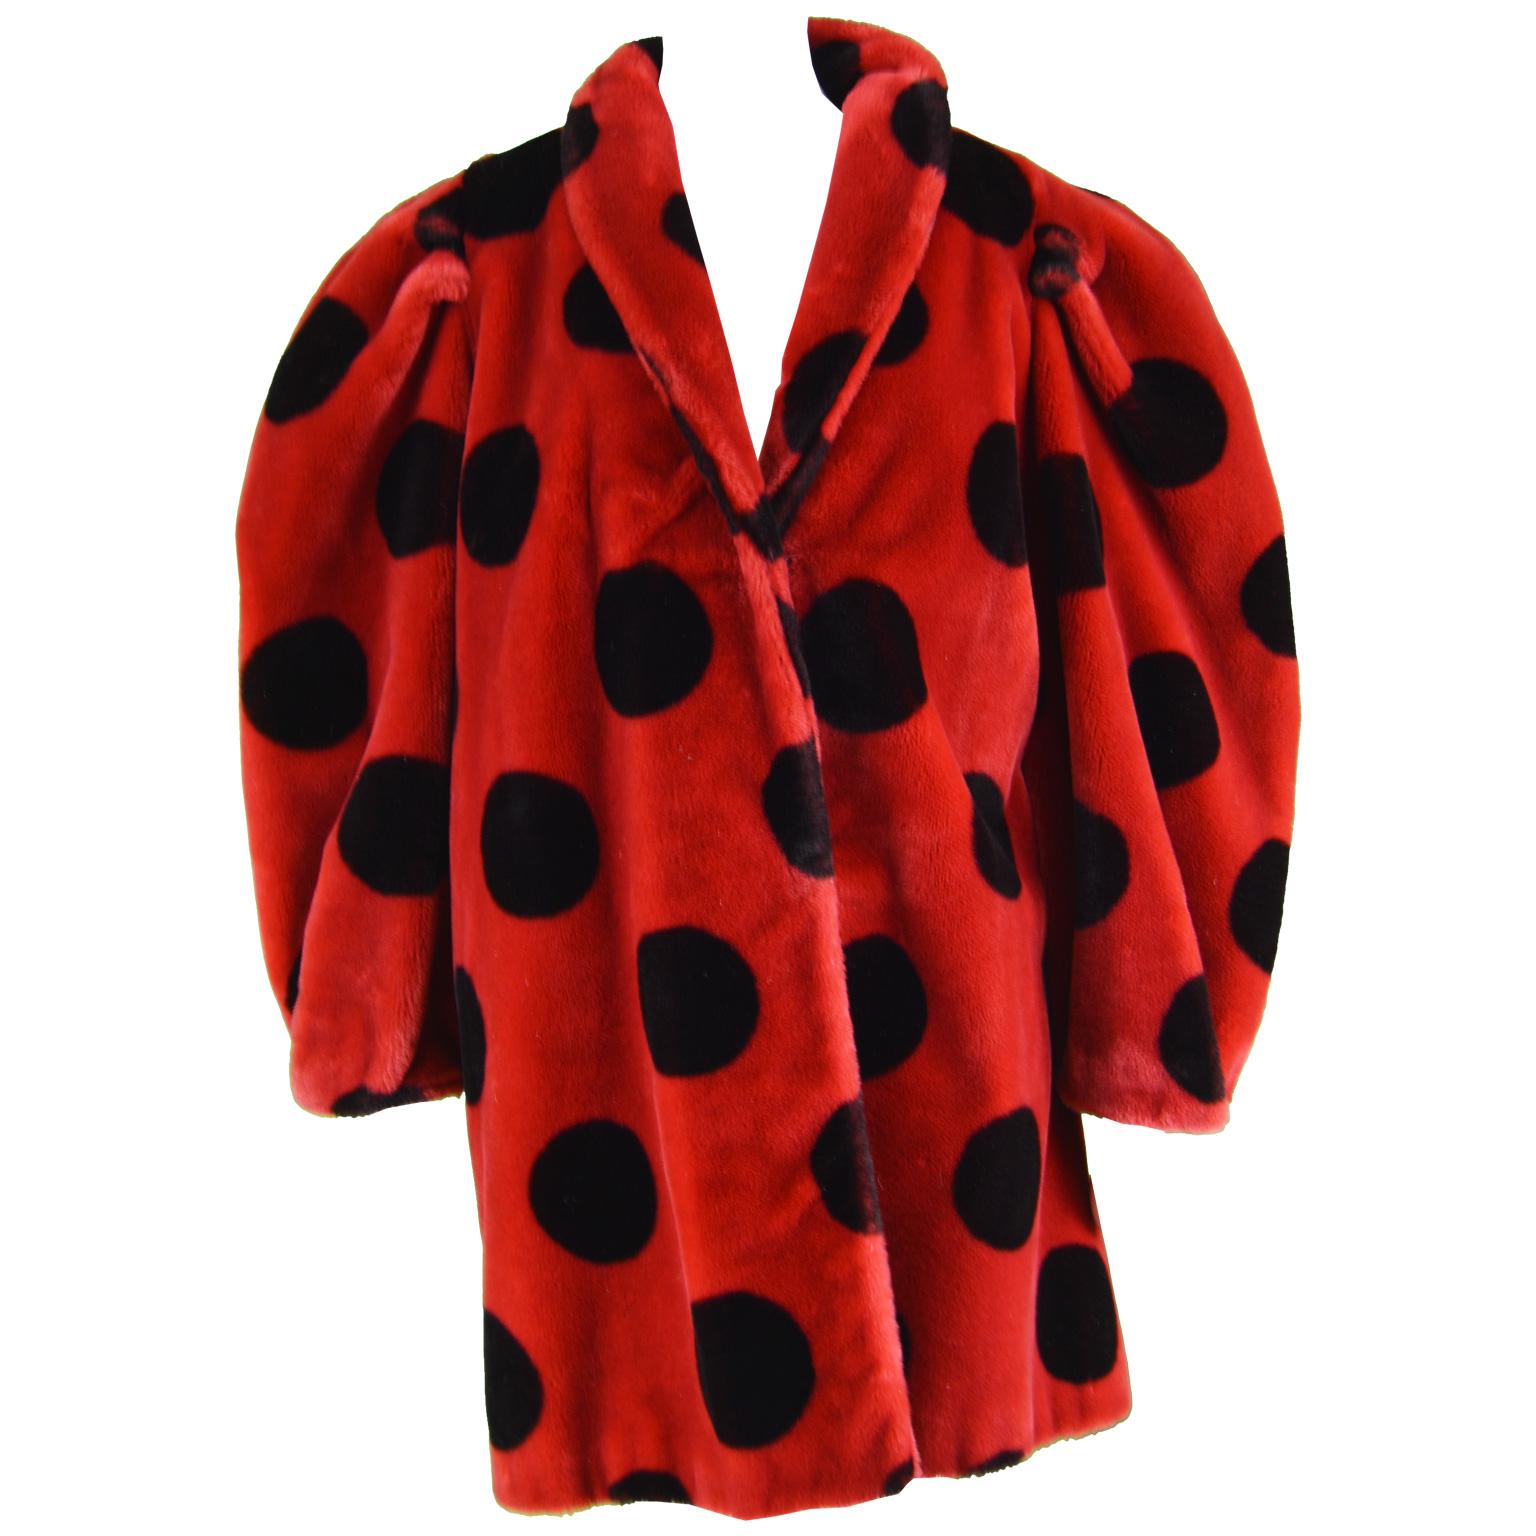 Apparence Paris Striking Red & Black Polka Dot Vintage Faux Fur Coat, 1980s